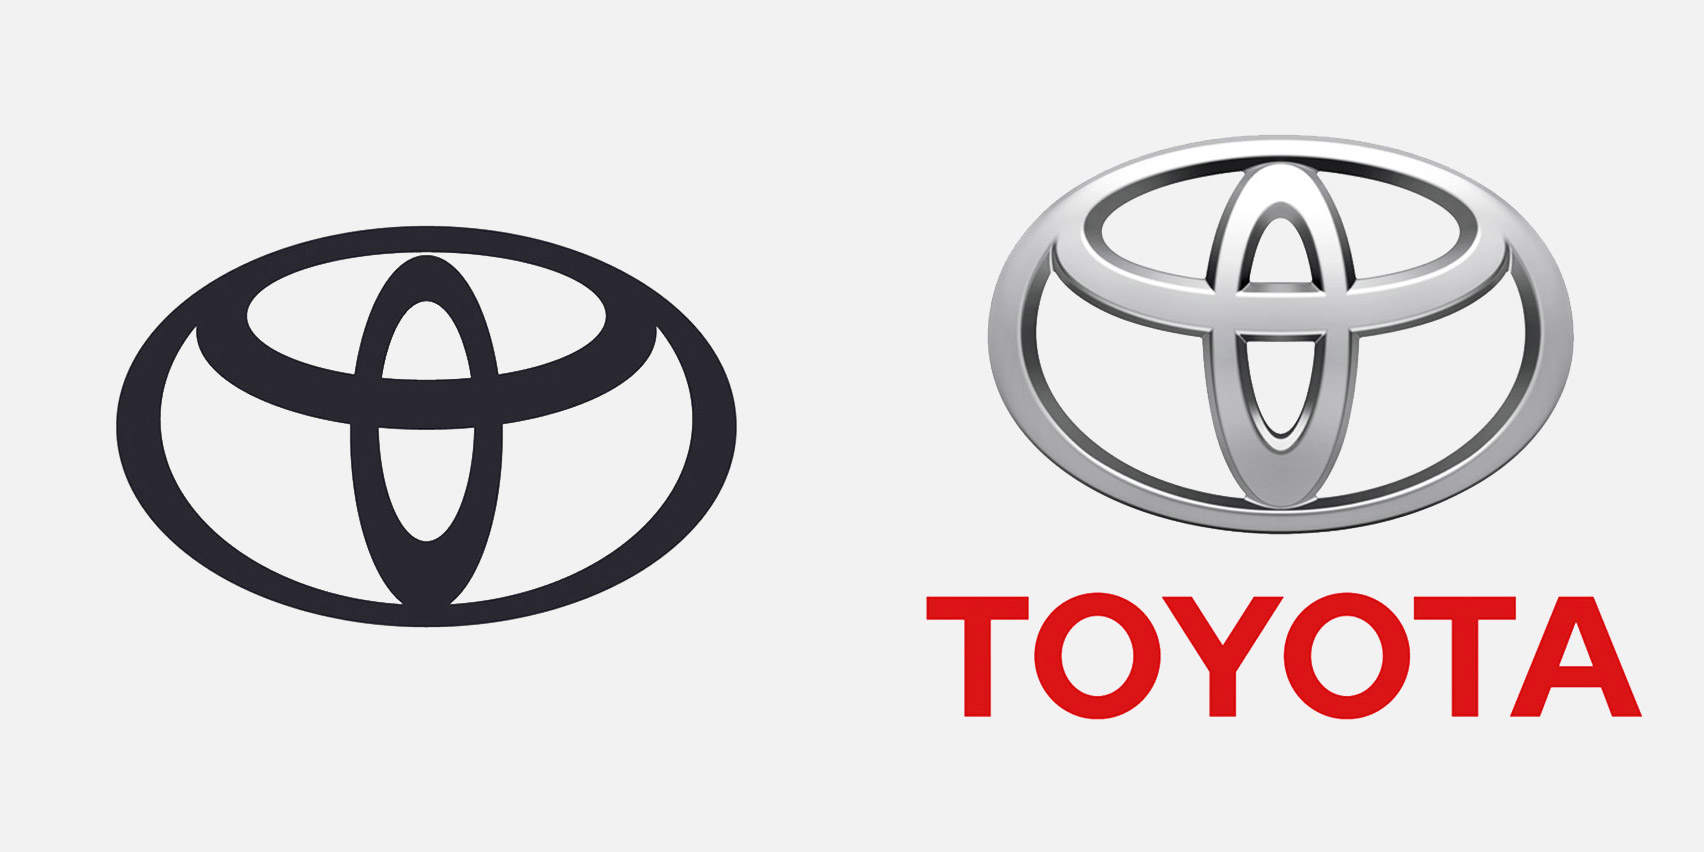 Toyota flat logo